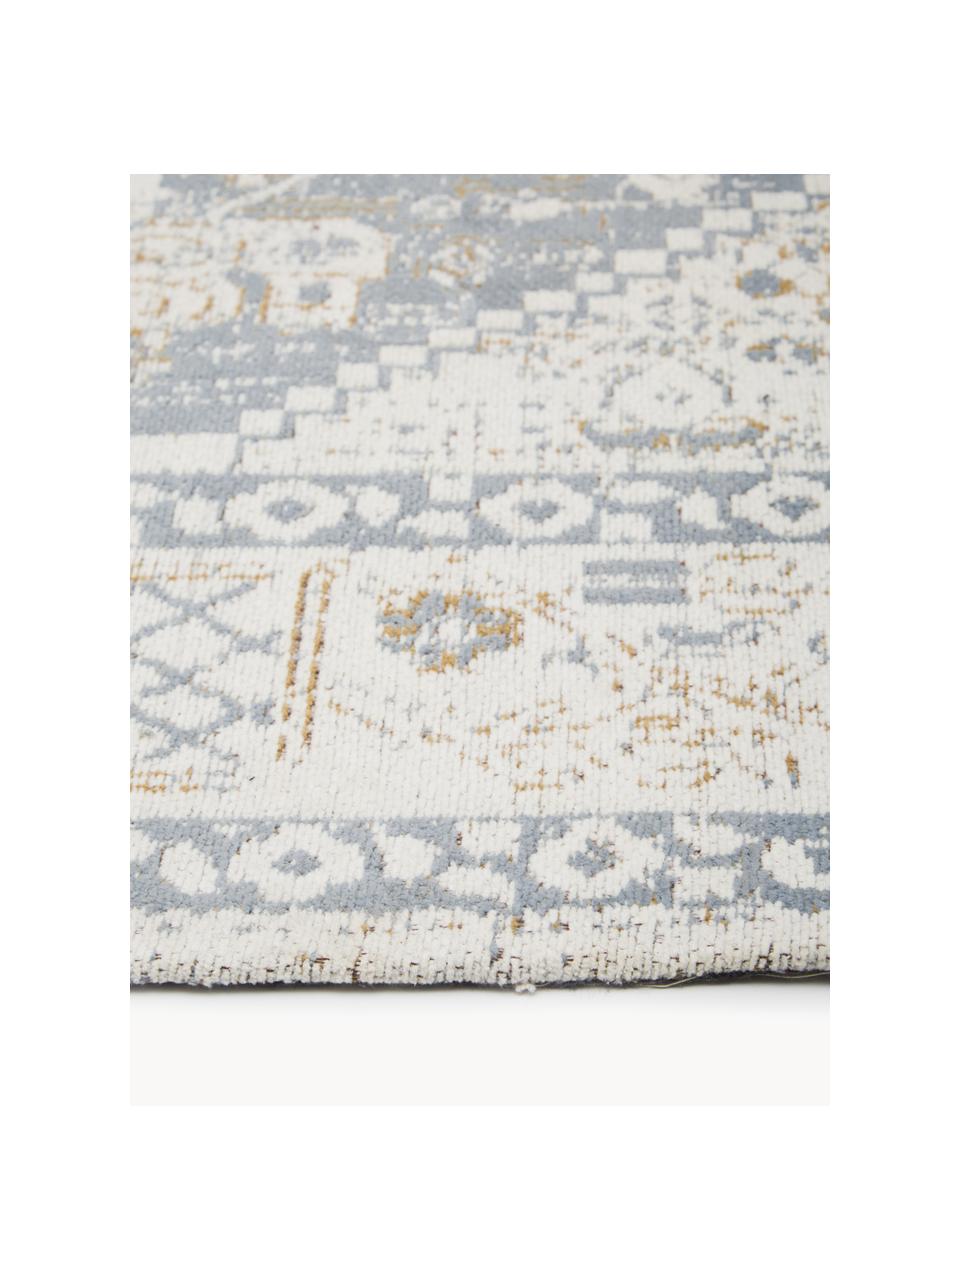 Ručně tkaný žinylkový koberec Neapel, Šedomodrá, krémově bílá, Š 160 cm, D 230 cm (velikost M)